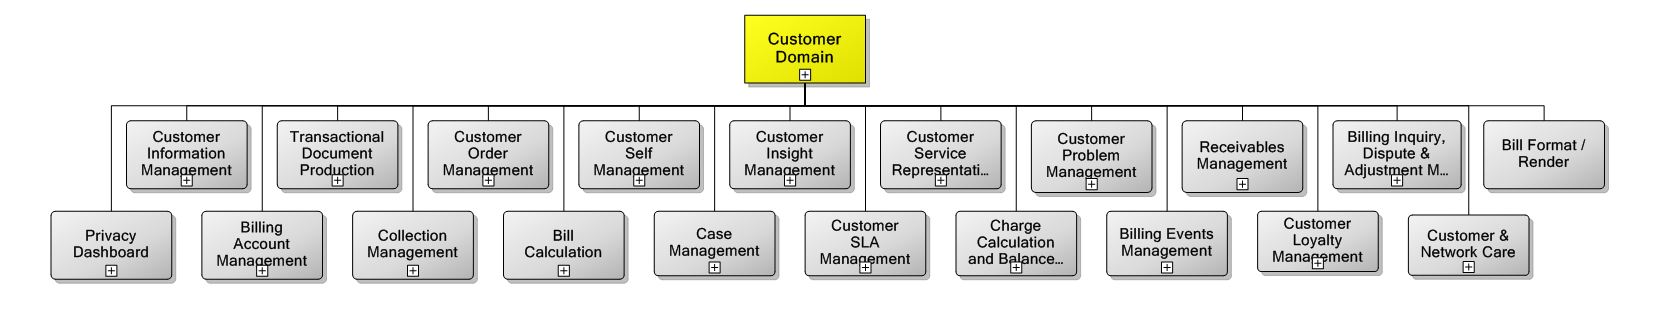 5. Customer Management Domain